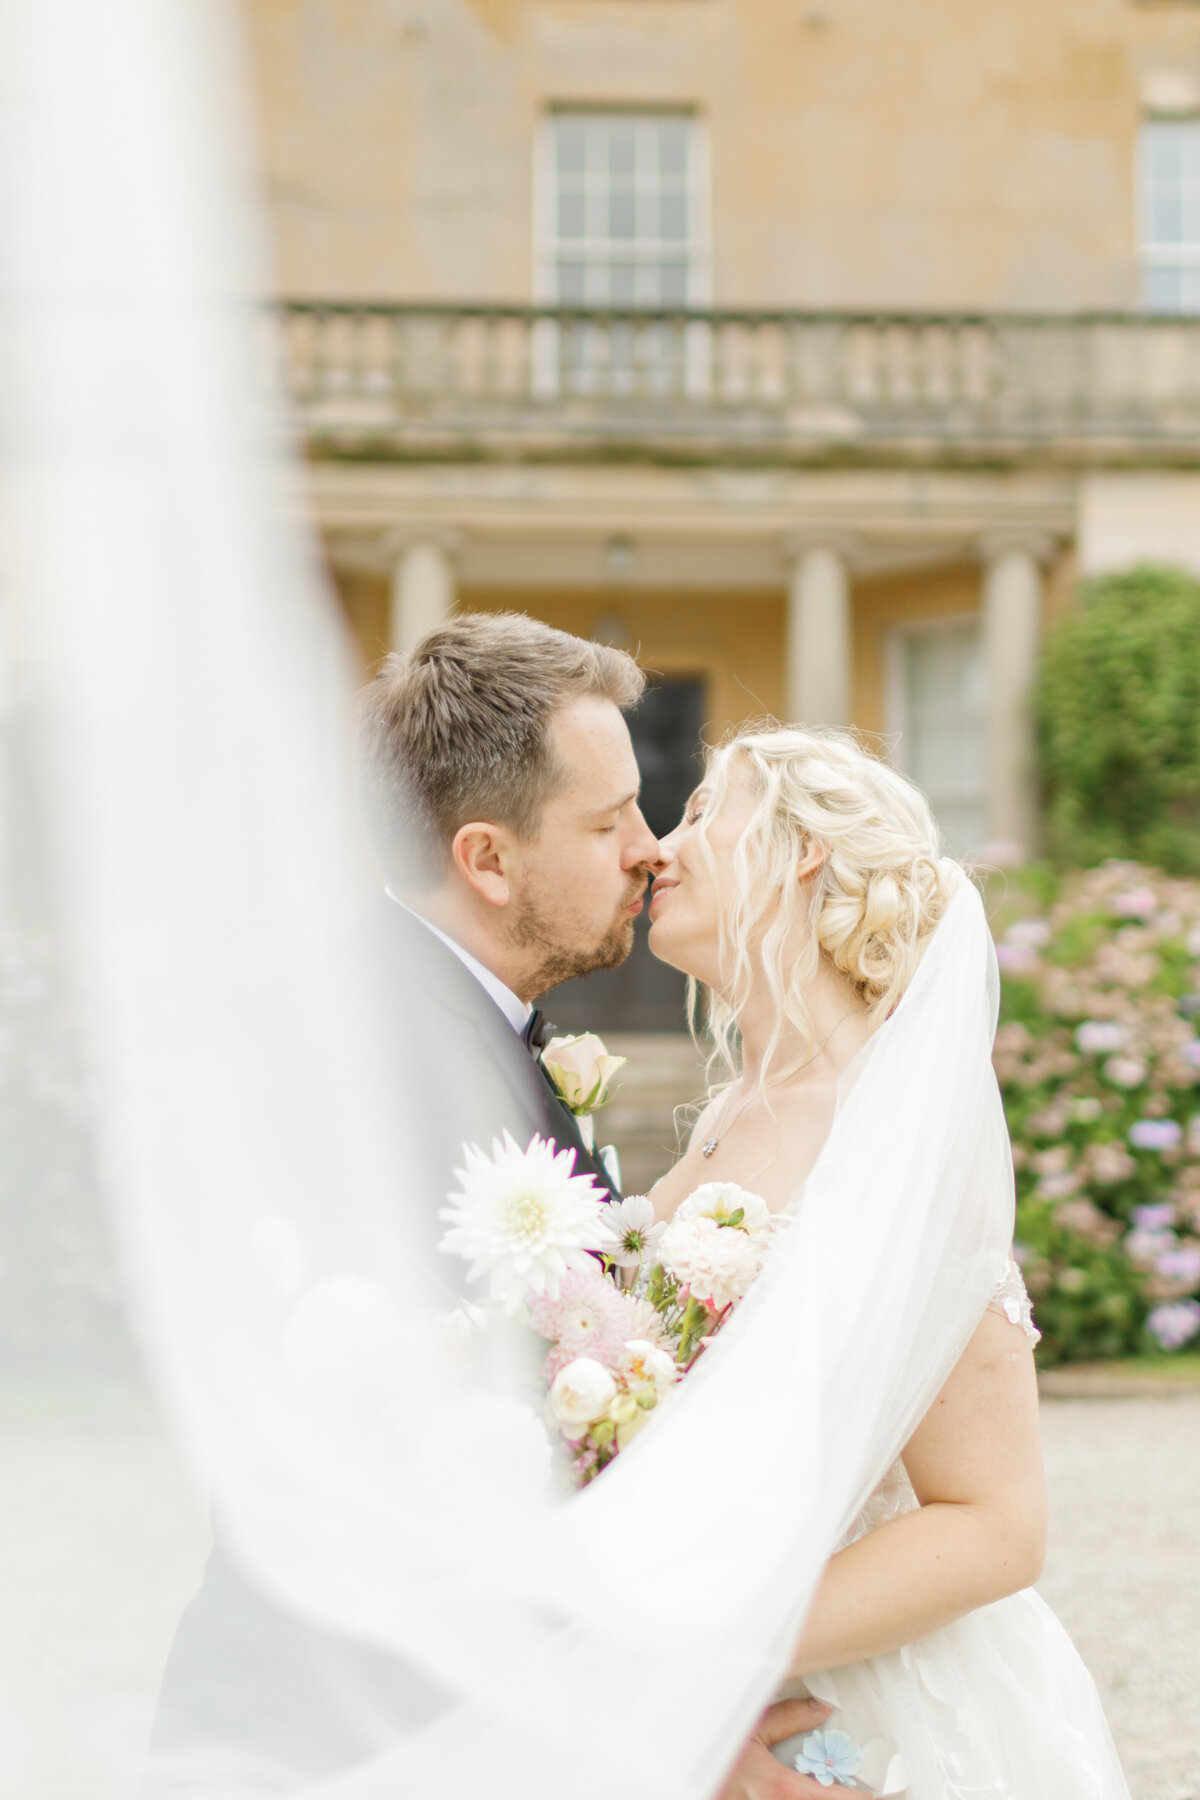 TanyaFlannaganPhotography-WeddingPhotographer-Worcester-Cheshire-Yorkshire-Shropshire-Shrewsbury-LightandAiryWeddings-535